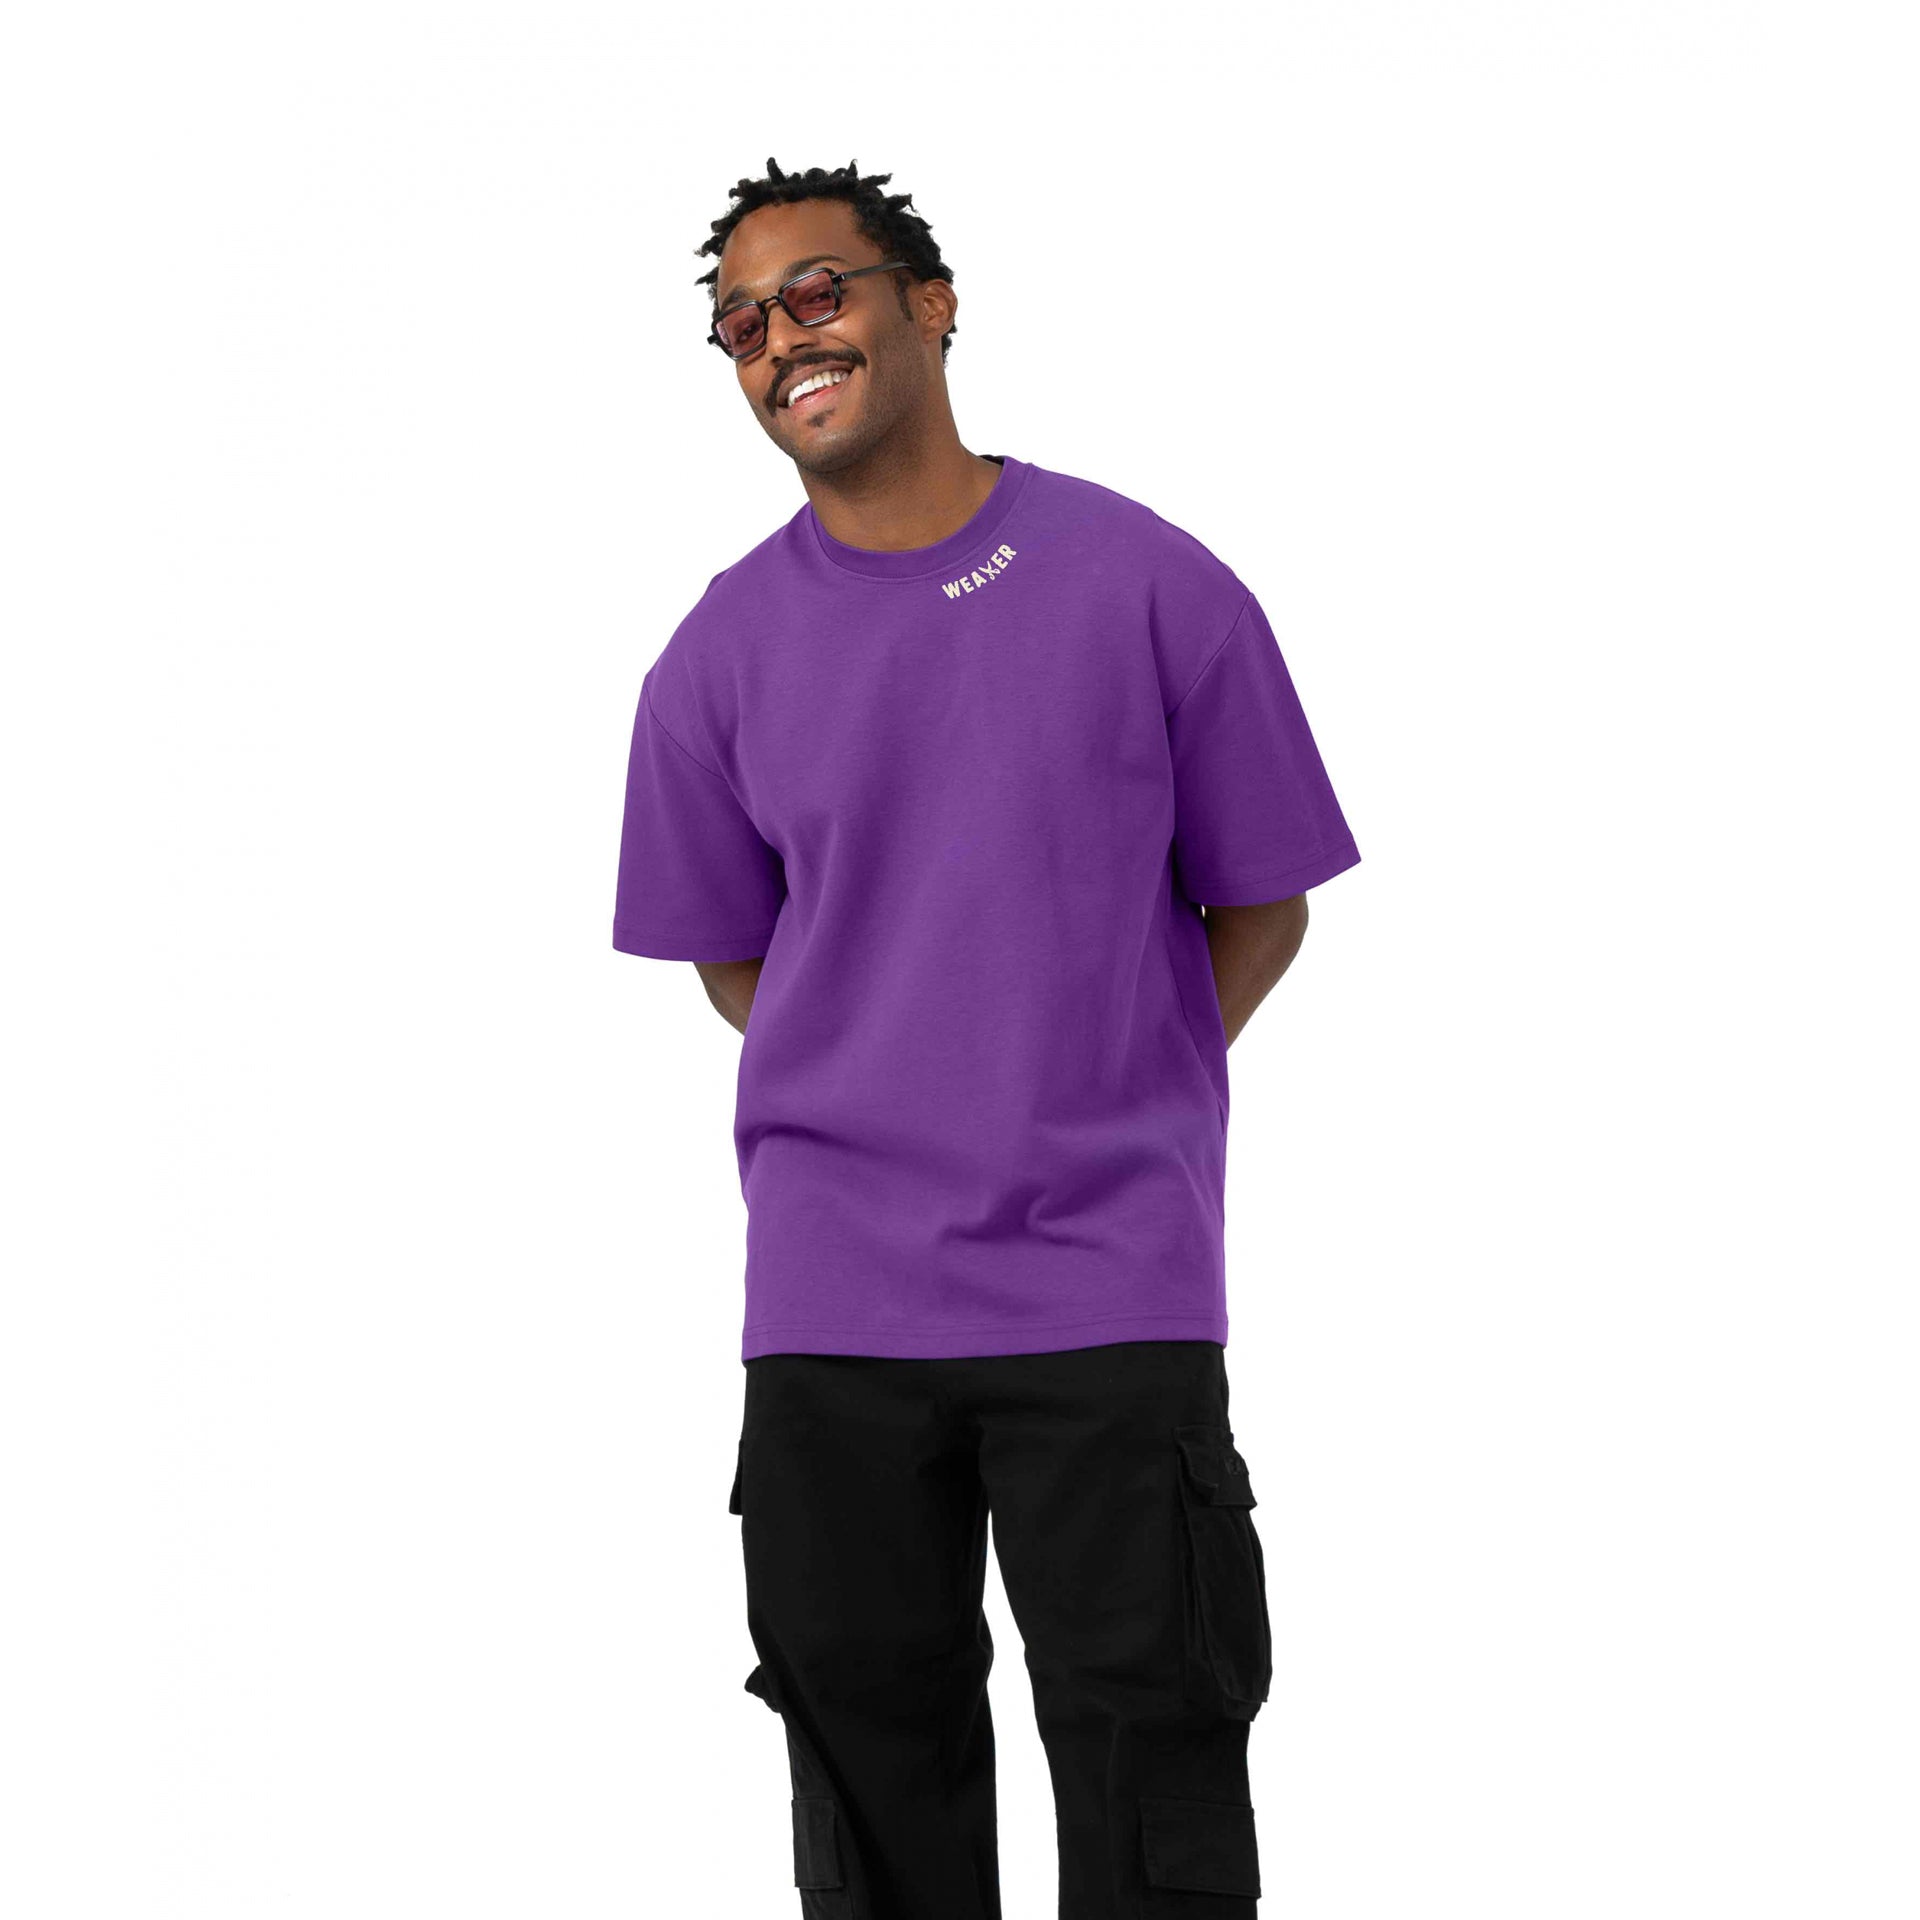 Purple "Characters" Cotton T-shirt By Weaver Design